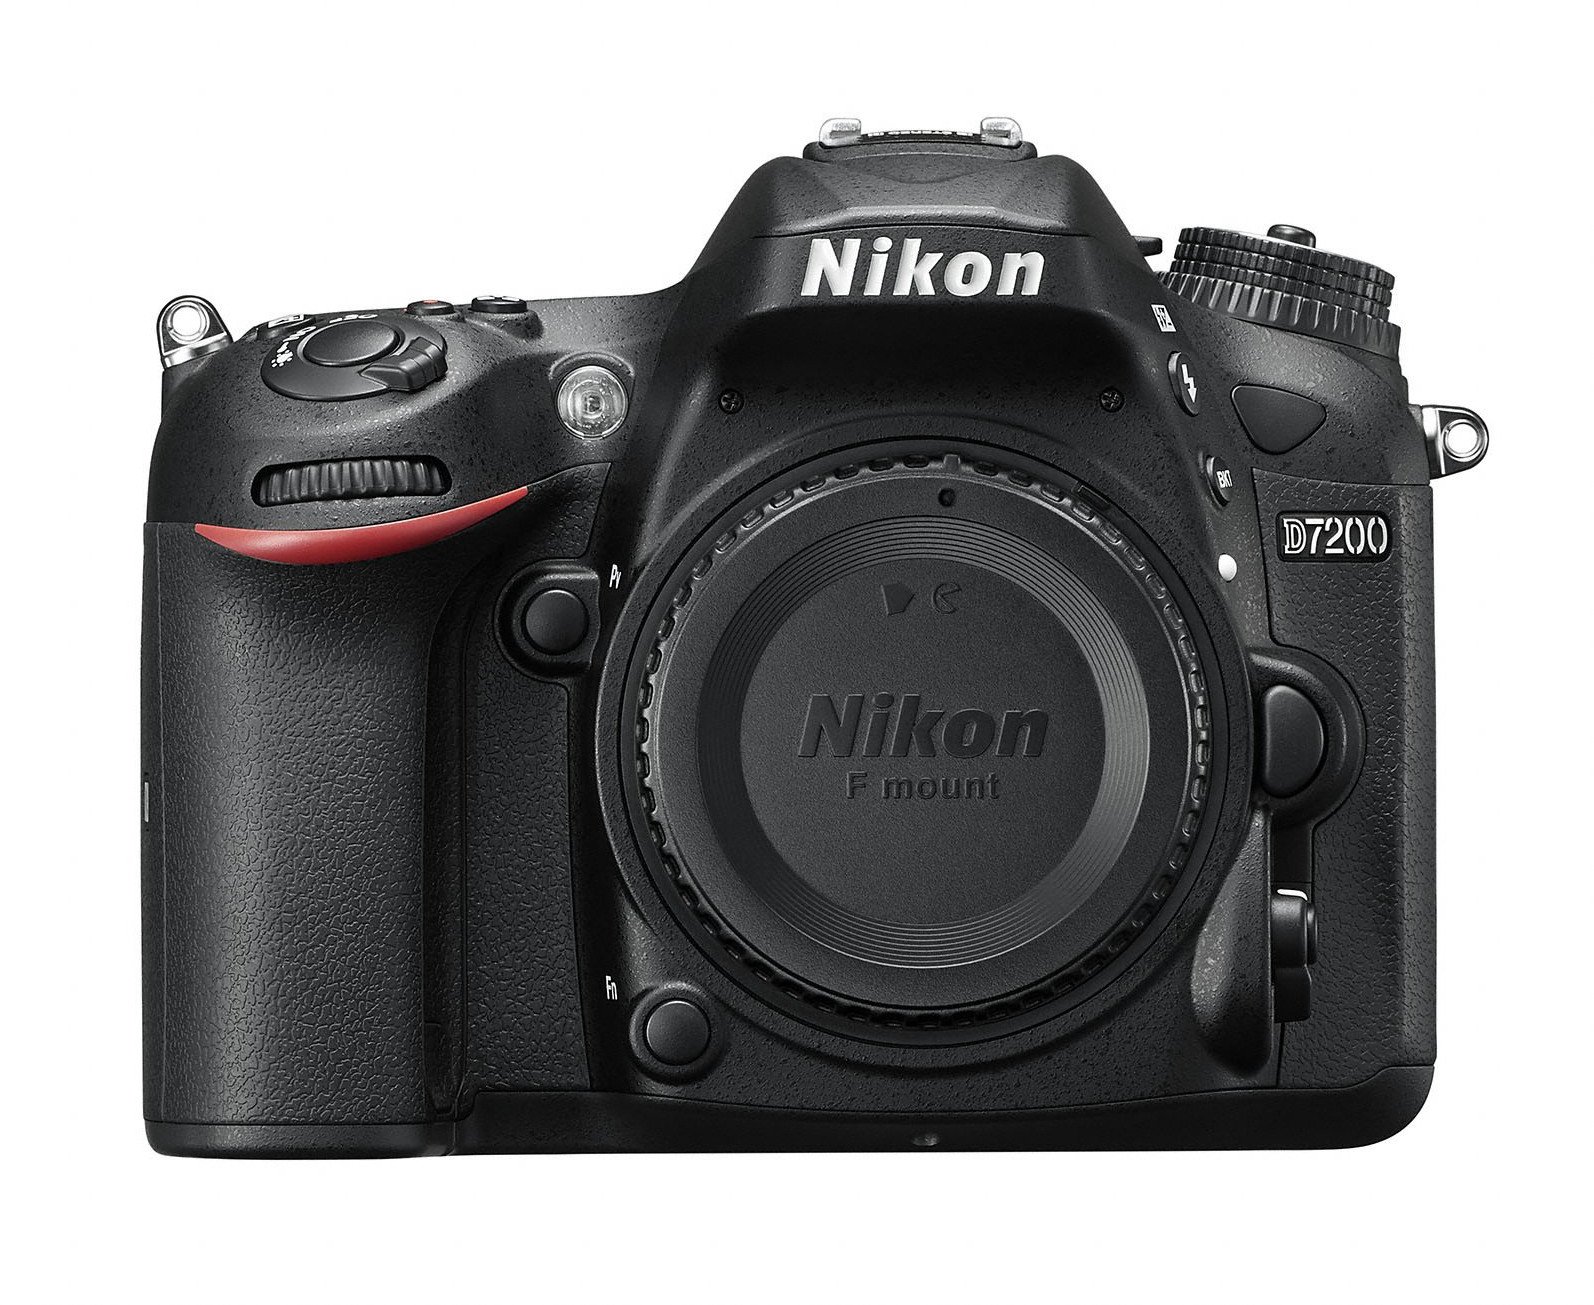 Nikon D7200 with Sigma 17-50mm f2.8 lens